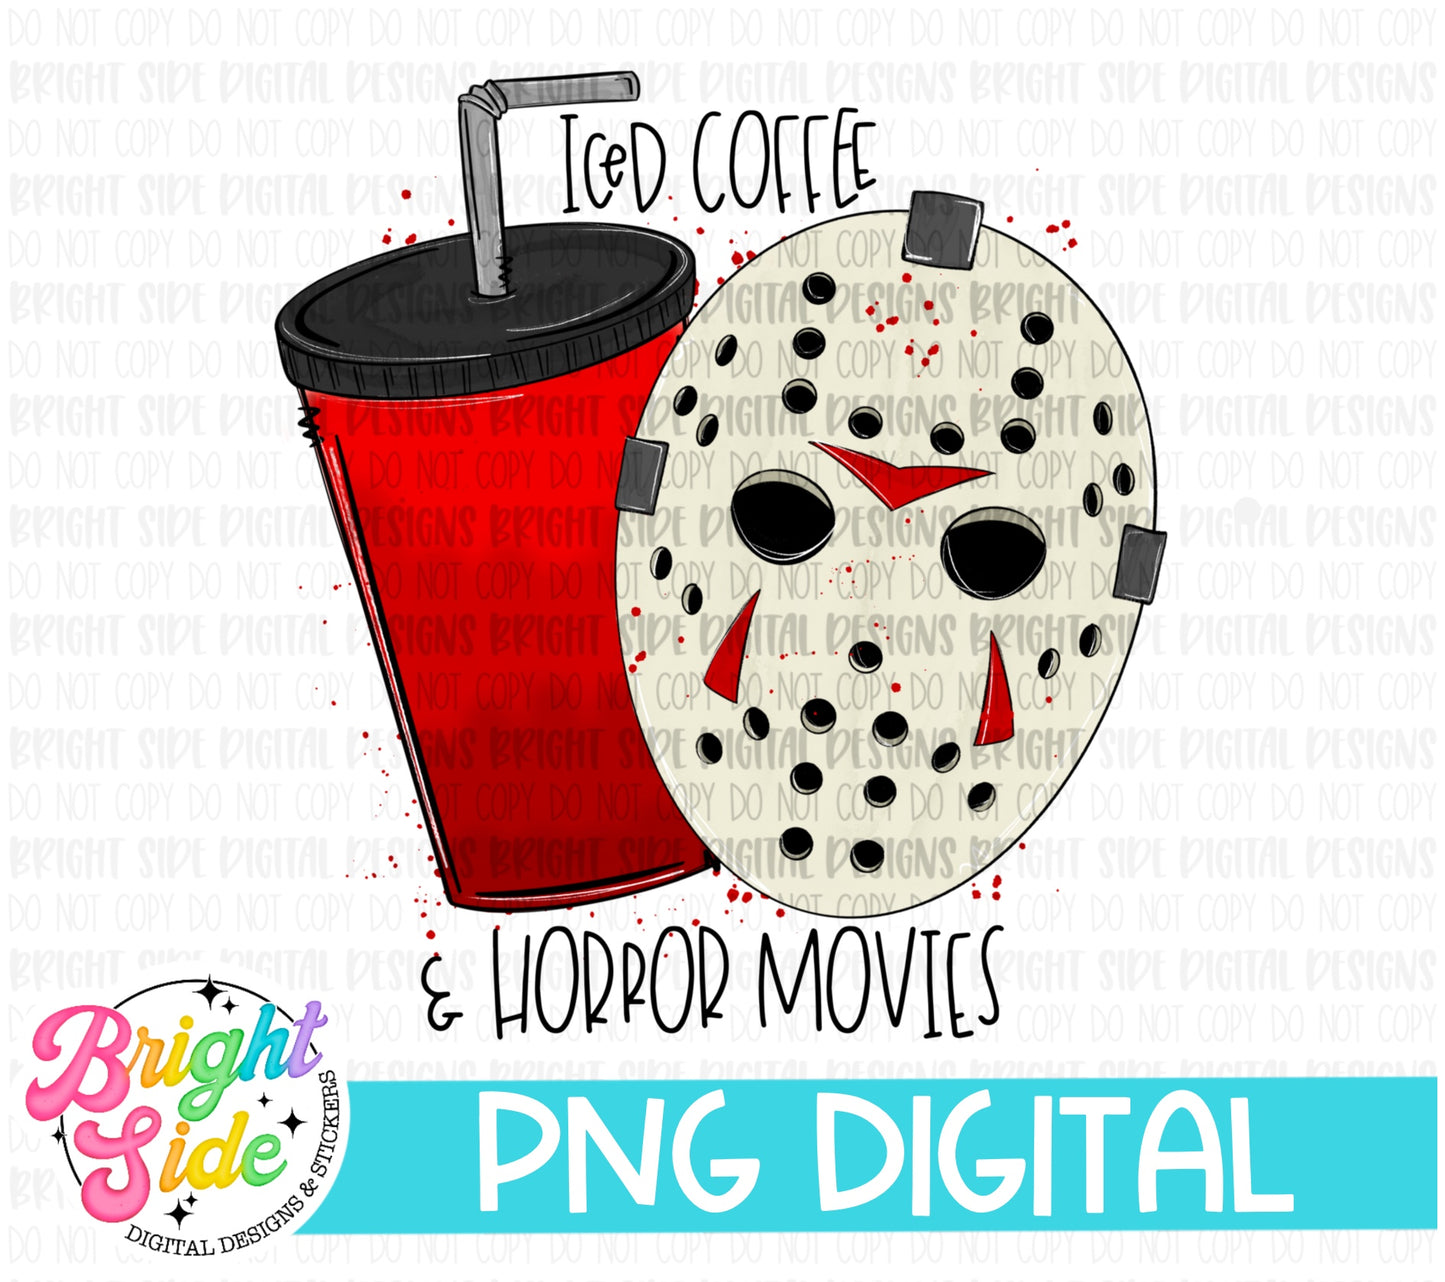 Iced coffee & horror movies